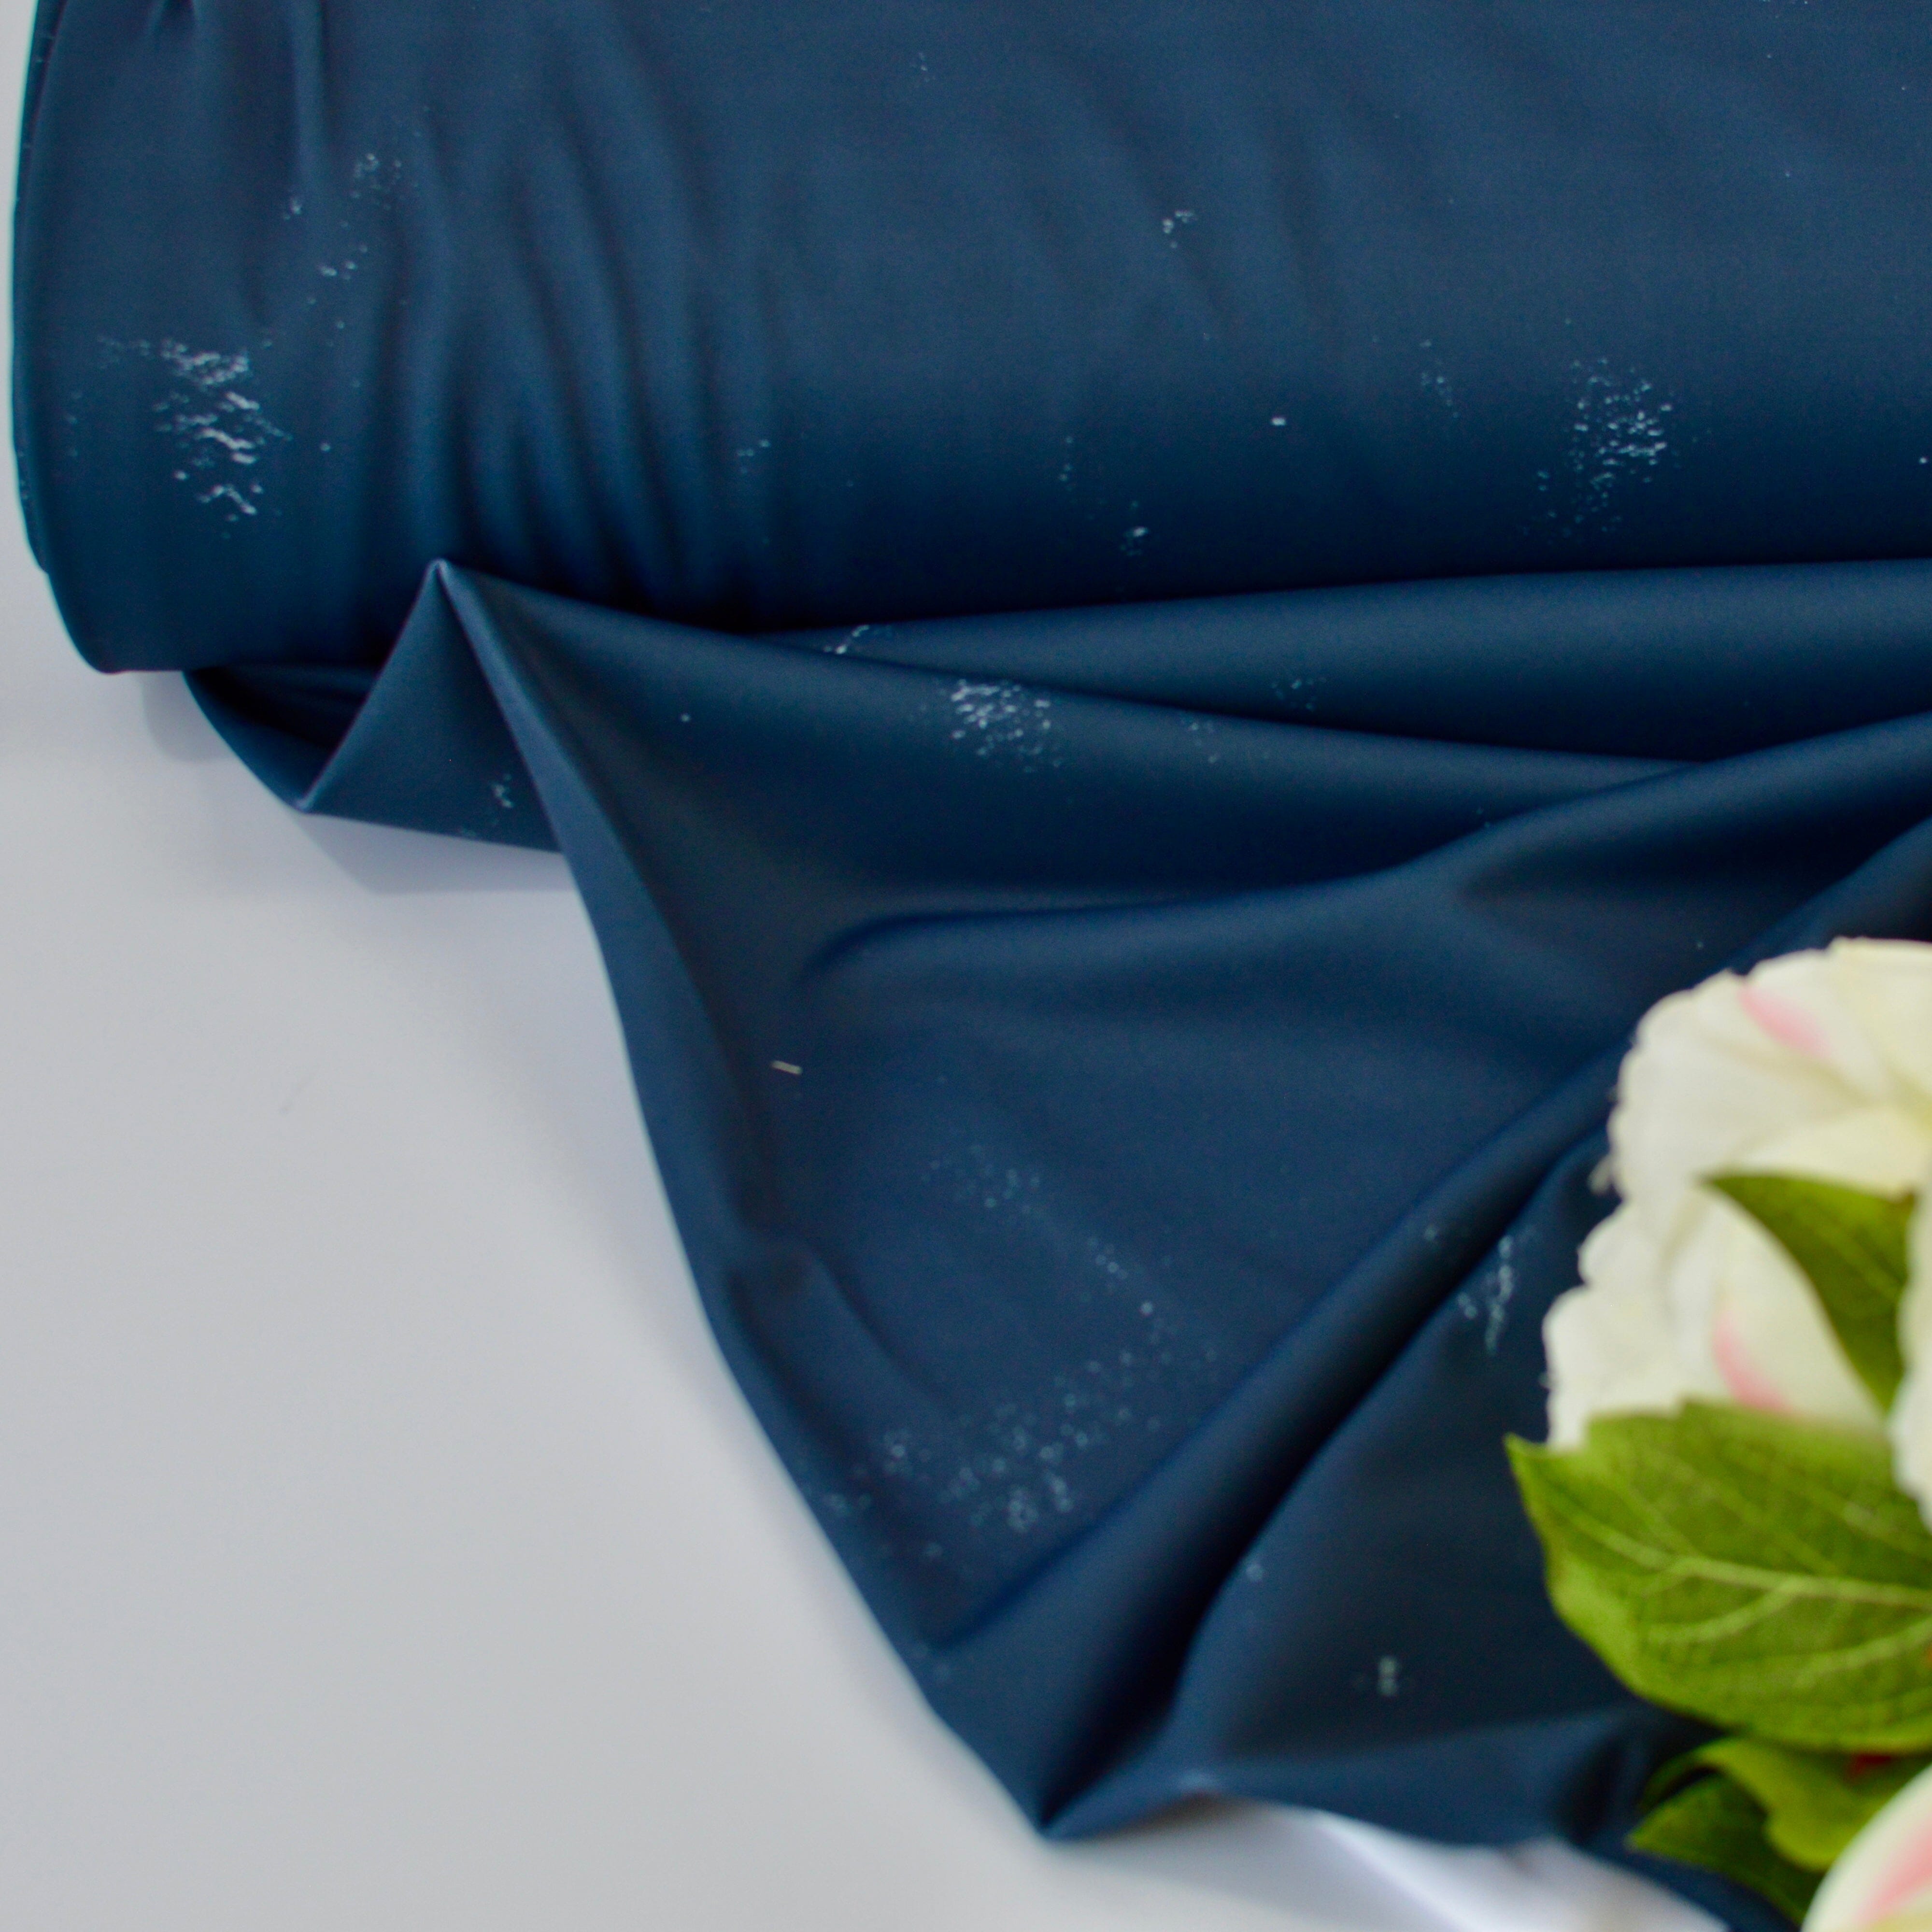 Sporty - Bade-/Sportmaschenware Ambrosia Paint dark blue Fabric poshpinks